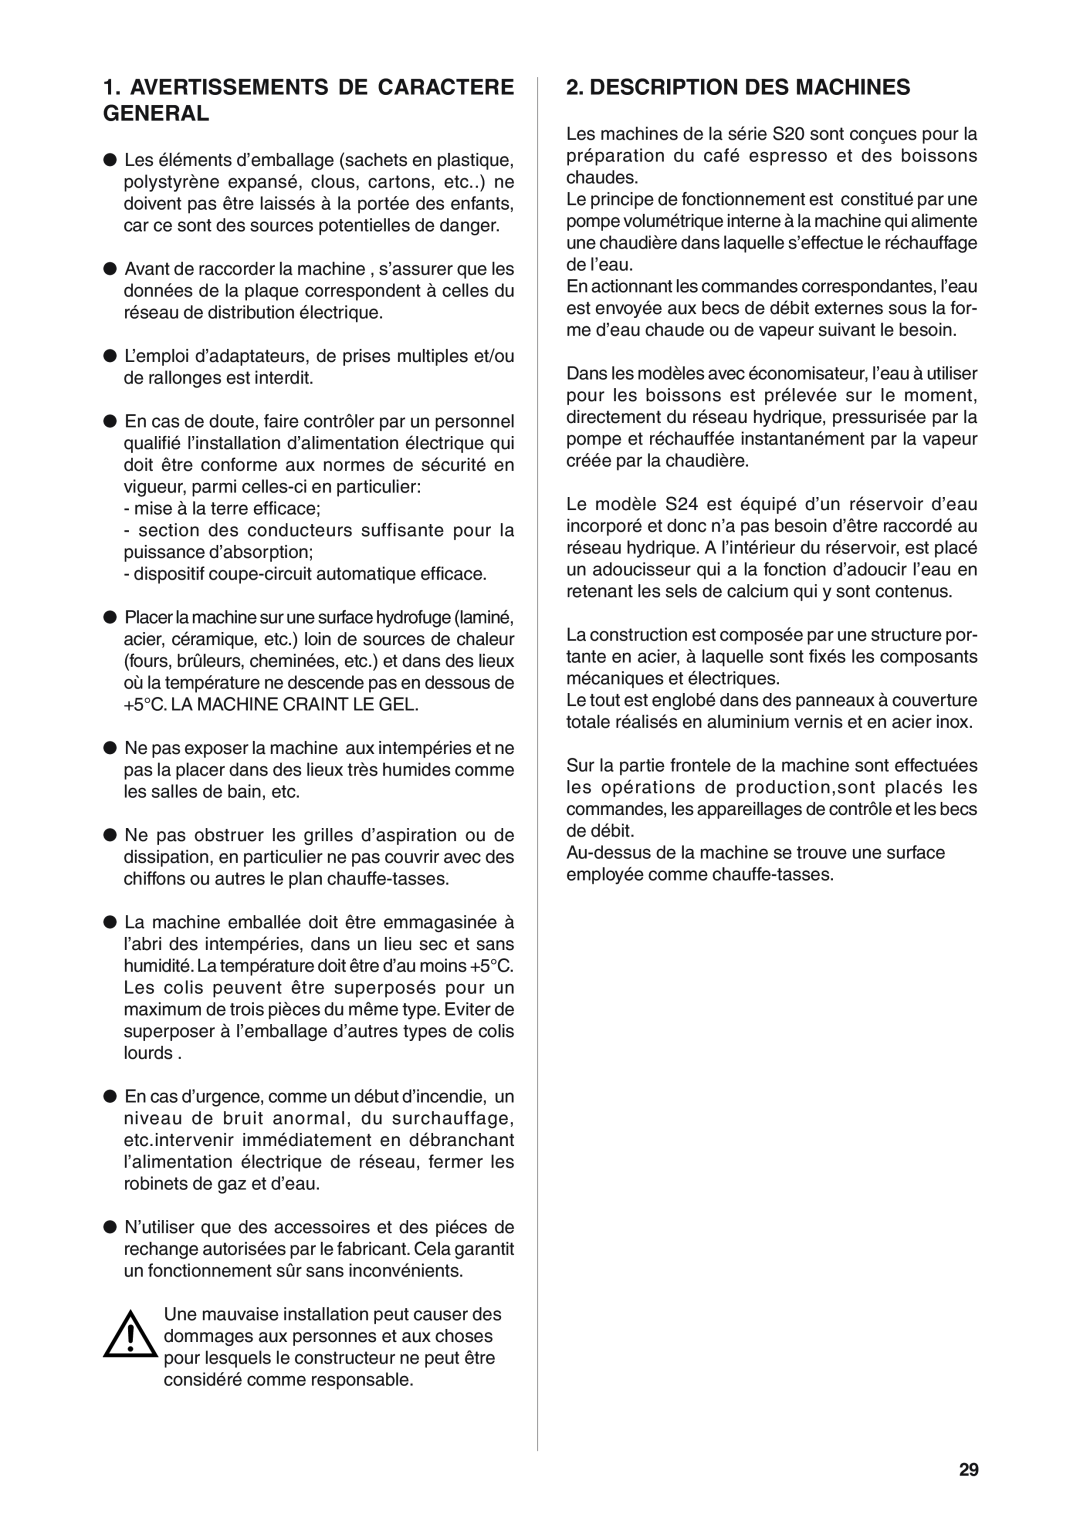 Rancilio S20 manual Avertissements De Caractere General, Description Des Machines 